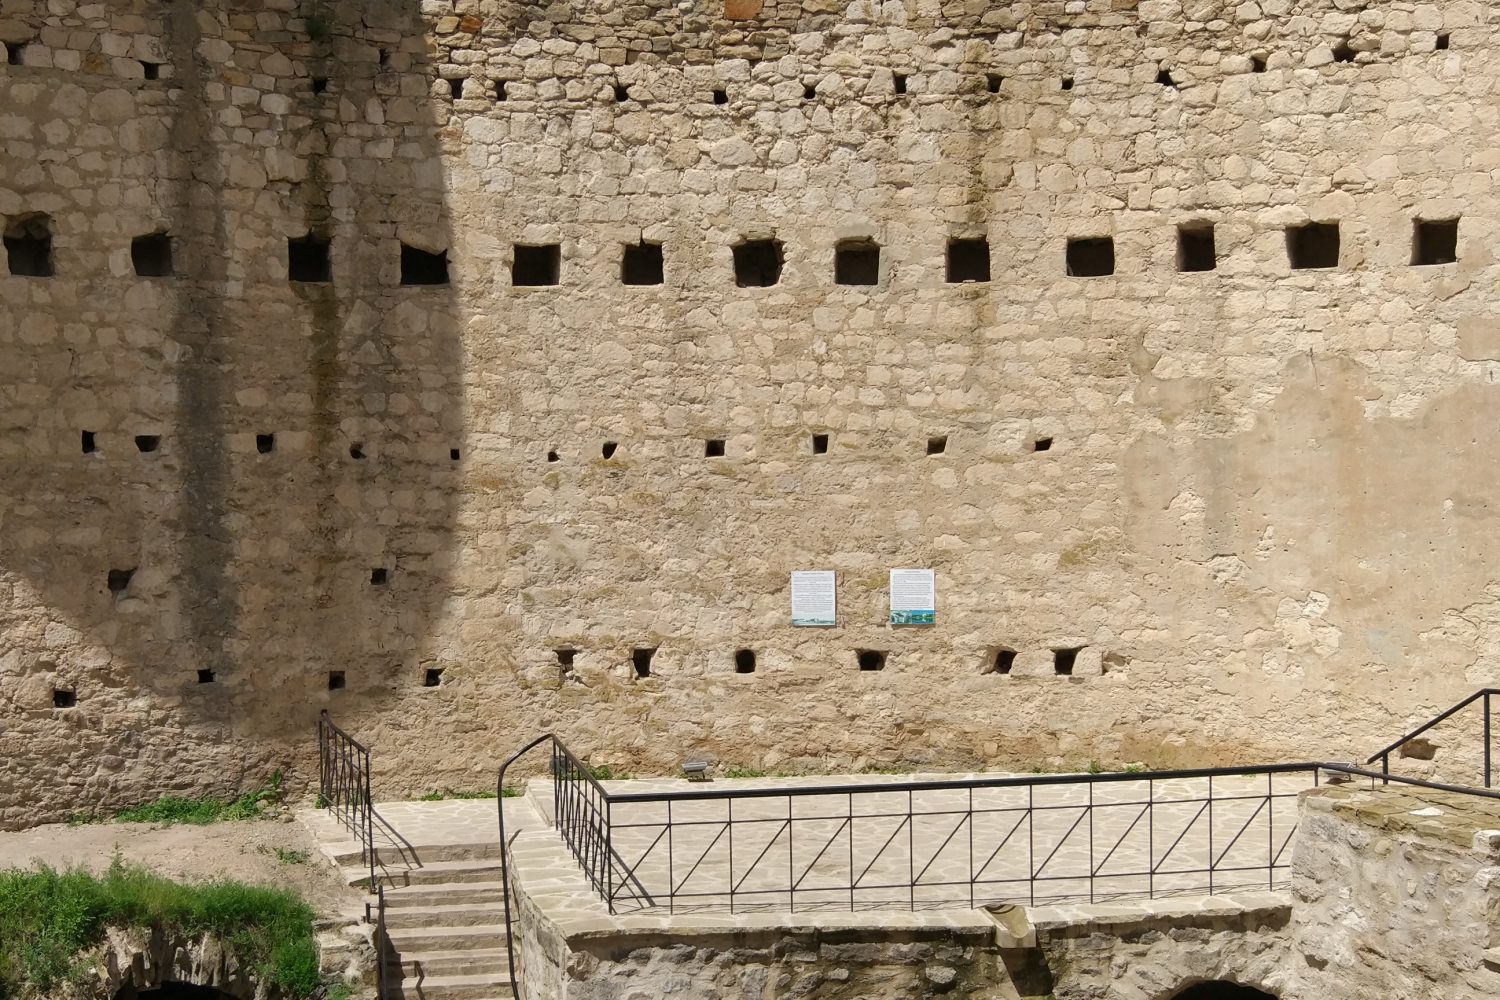 Soroca Fortress